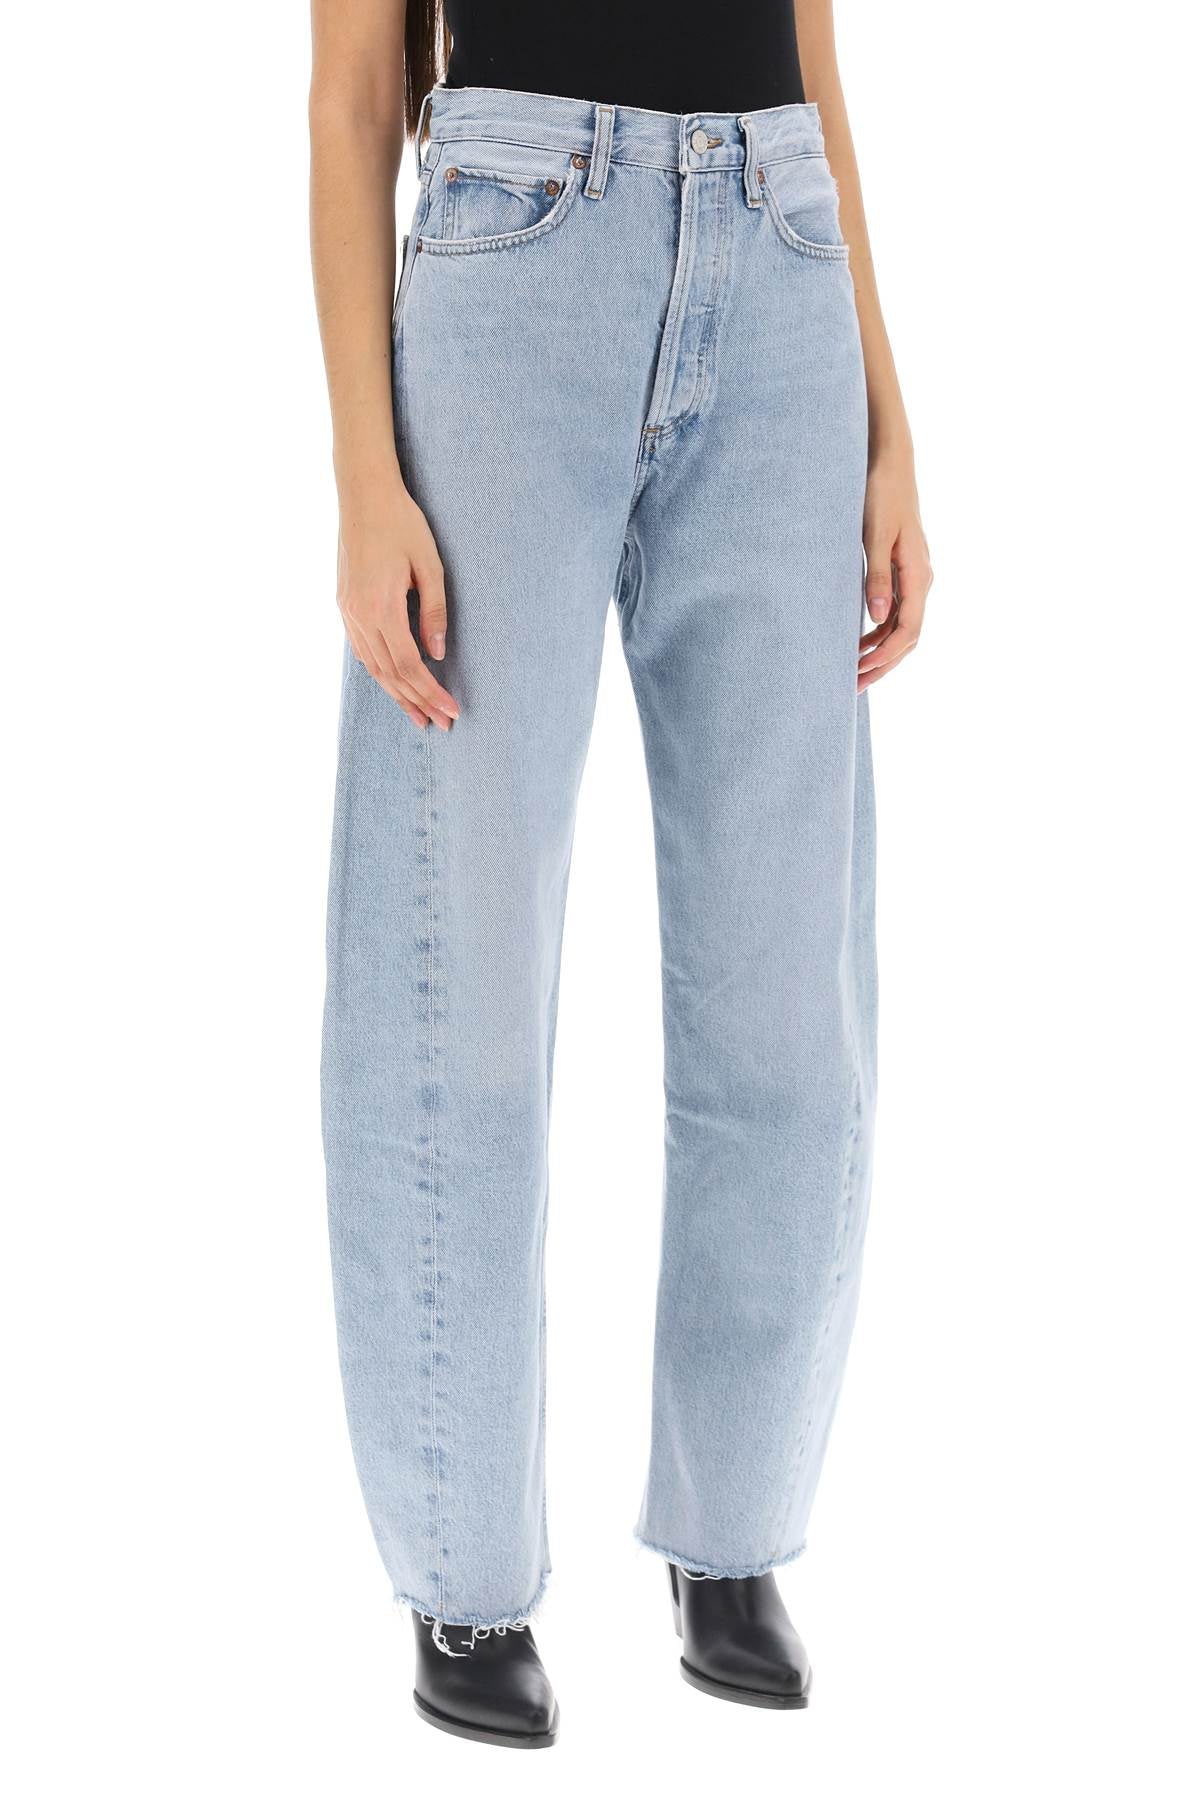 Agolde luna curved leg jeans-1